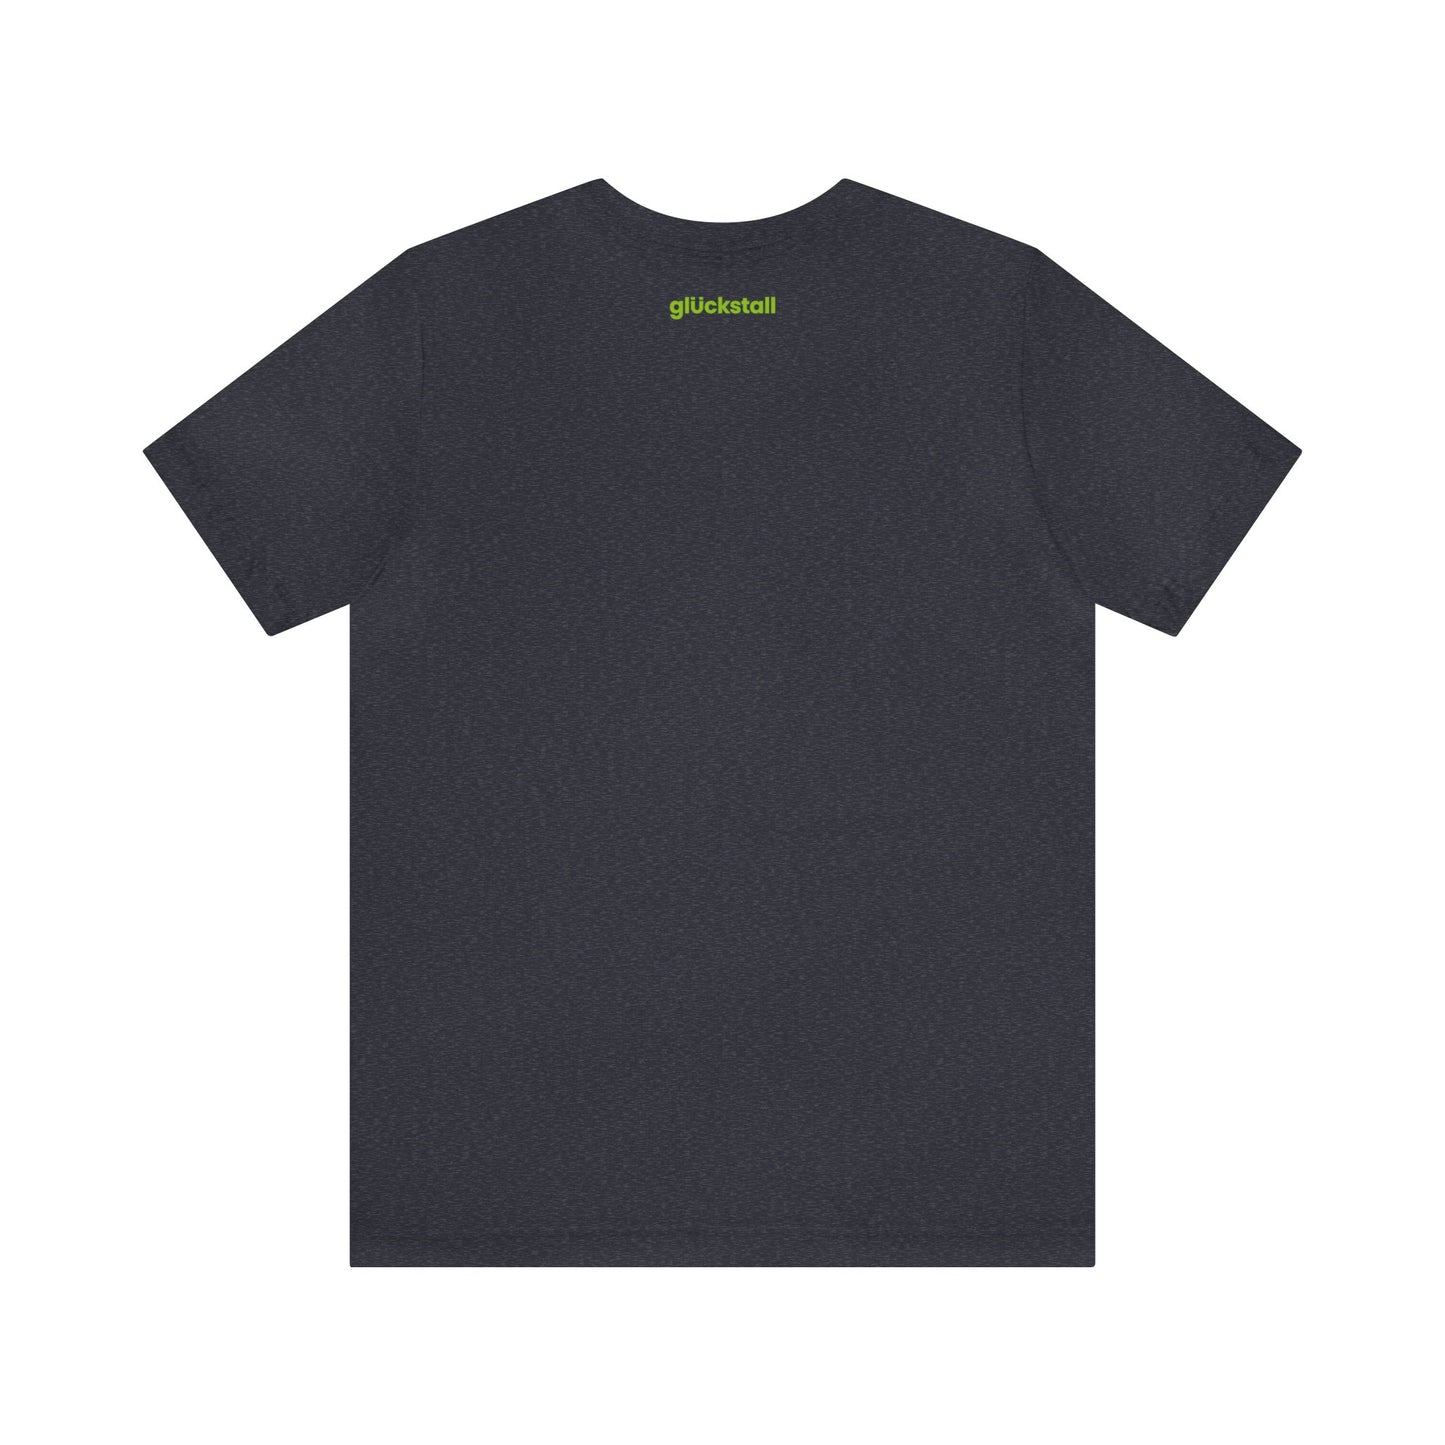 siri, geh ma' abäppeln – Unisex T-Shirt